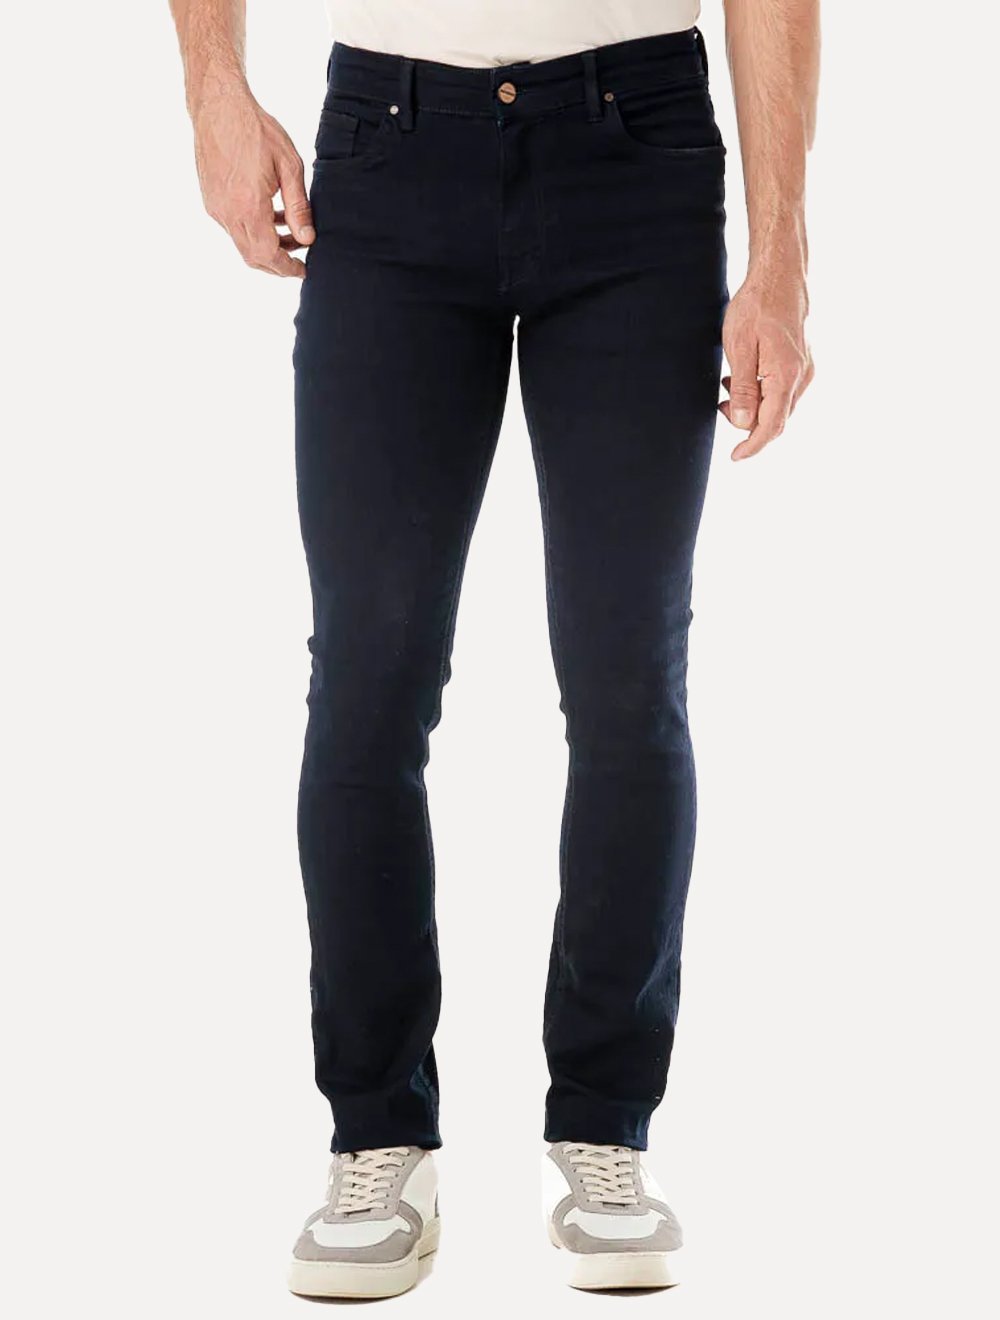 Calça King & Joe Jeans Masculina Slim Blue Black Escura